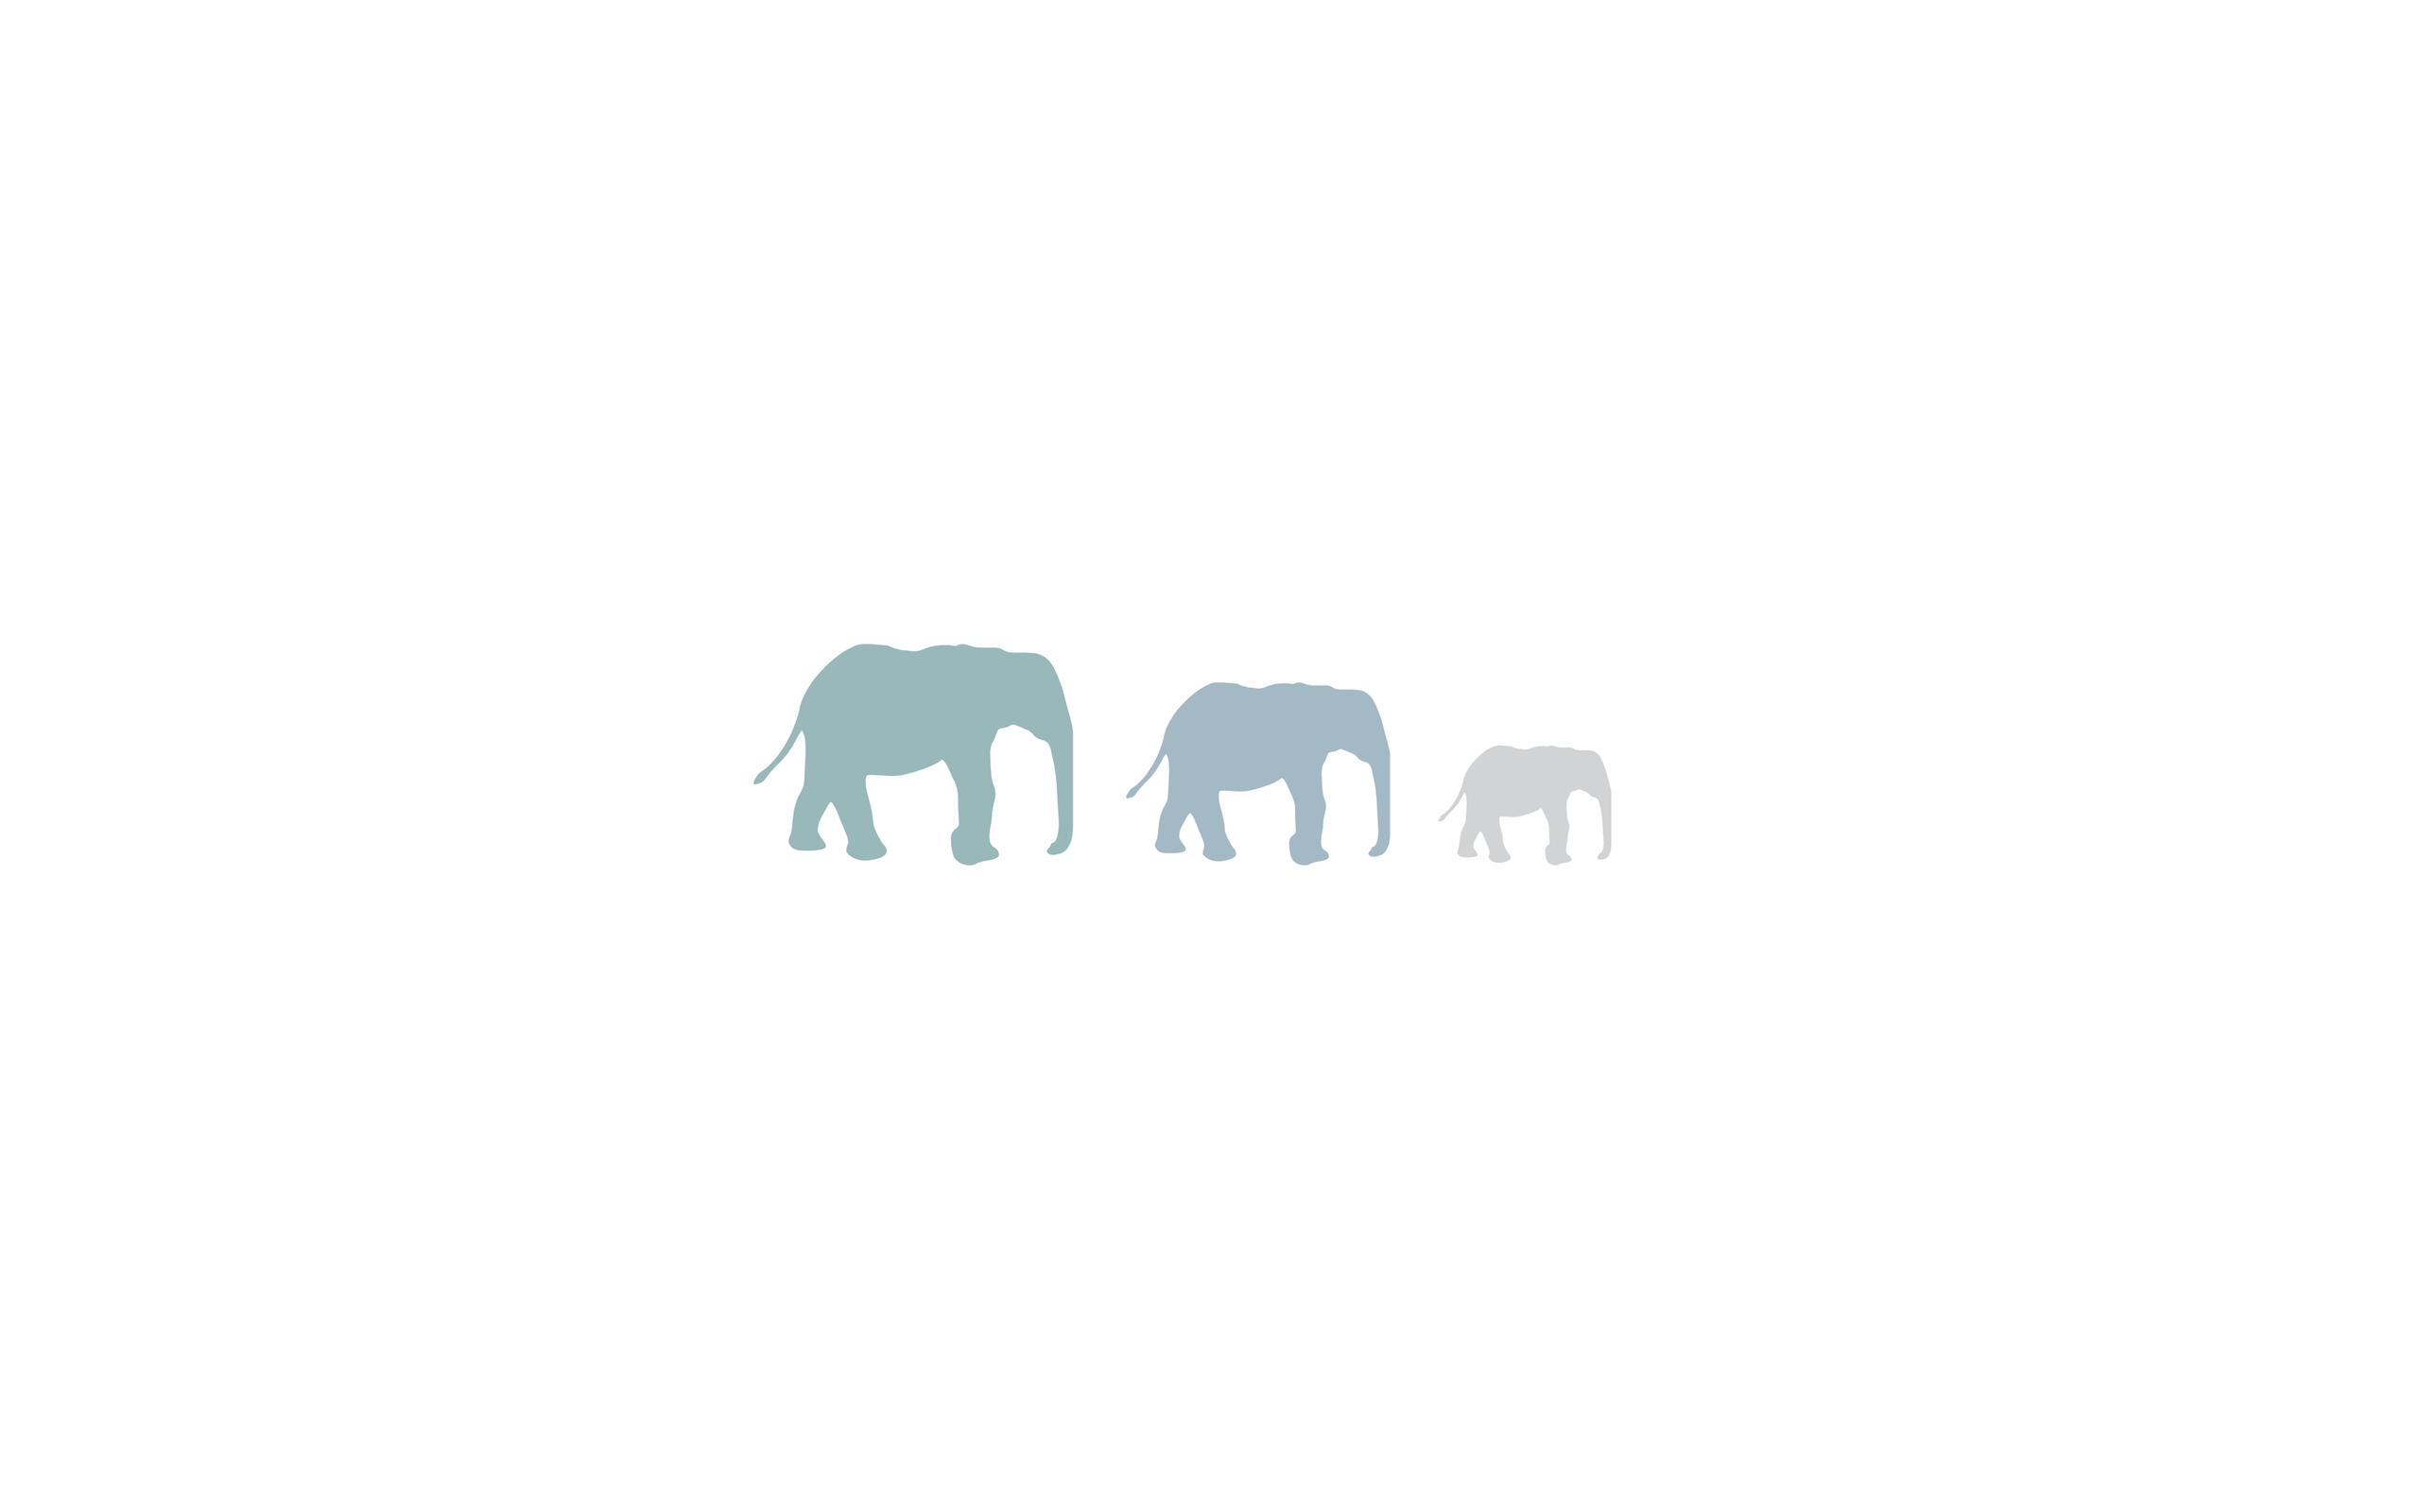 General 2560x1600 minimalism elephant simple background animals artwork mammals white background